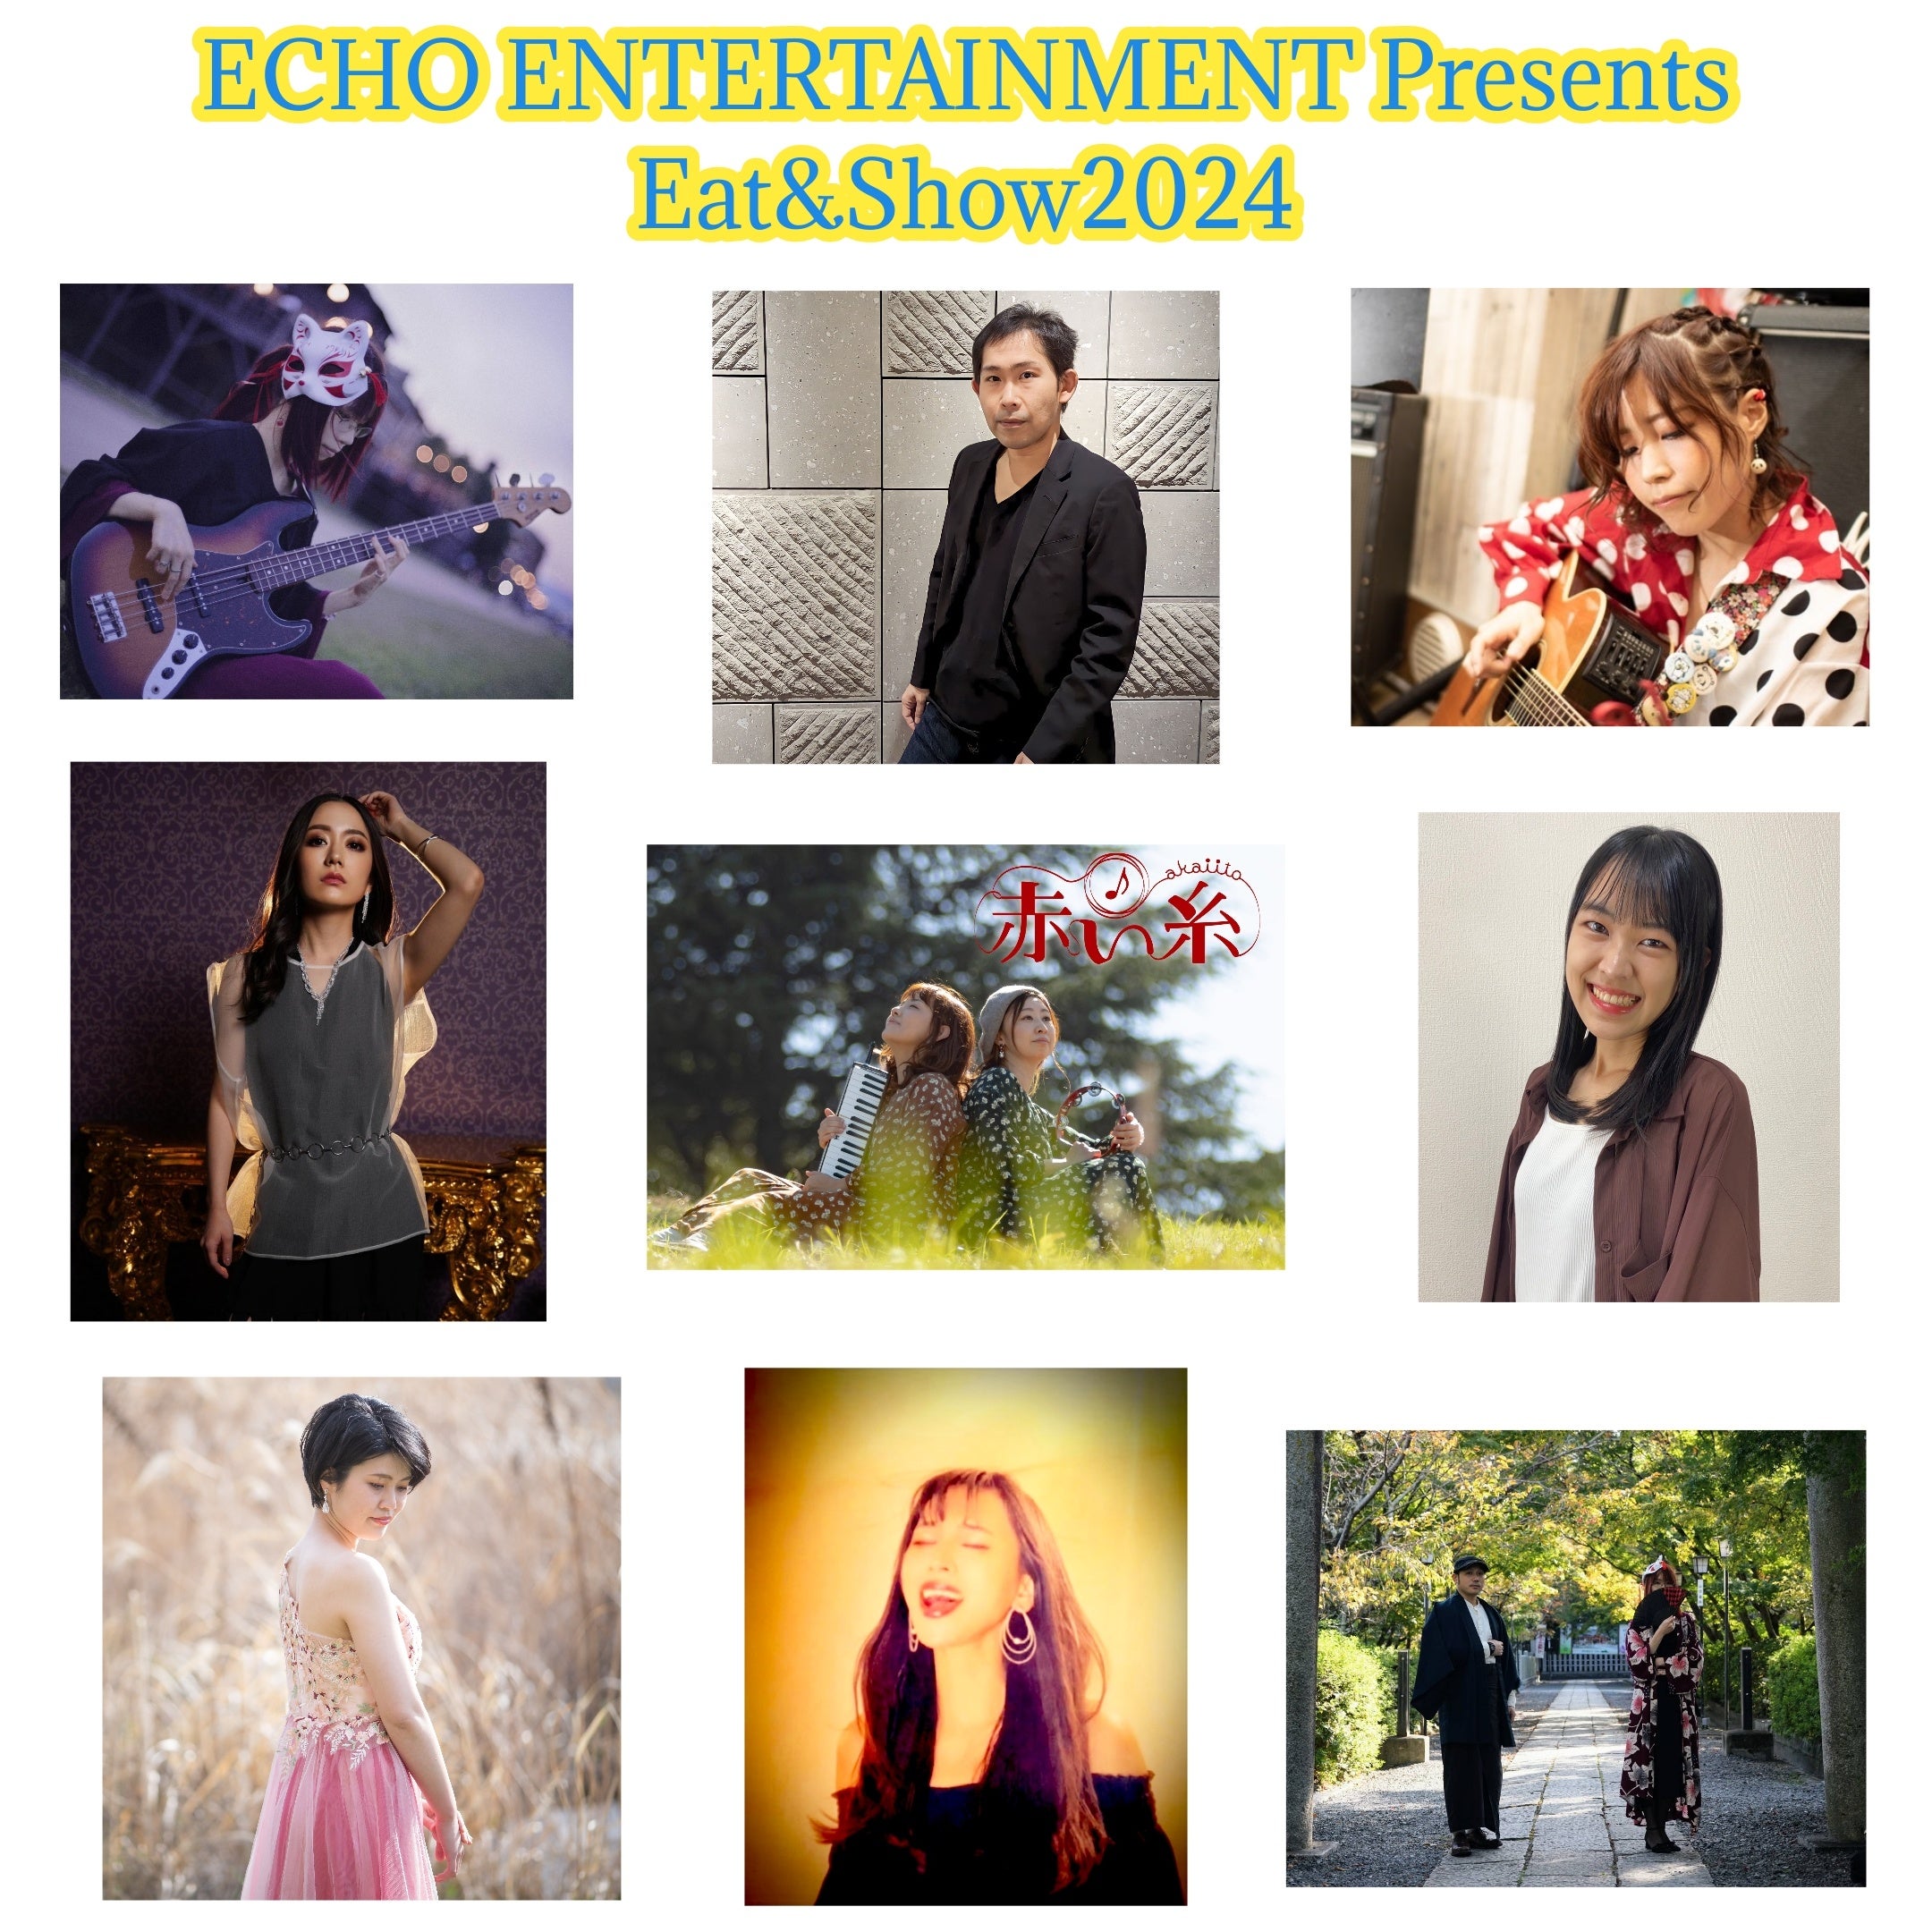 ECHO ENTERTAINMENT Presents gEat&Show 2024hDyEsJÌIIz